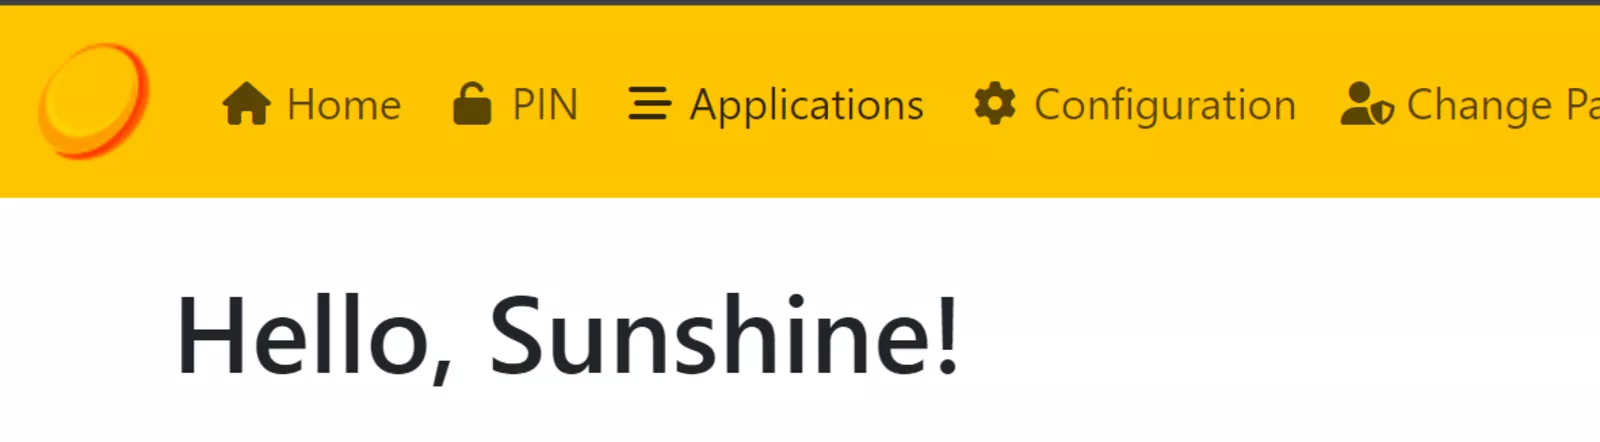 Снимок экрана раздела «Приложения» в клиенте Sunshine. 